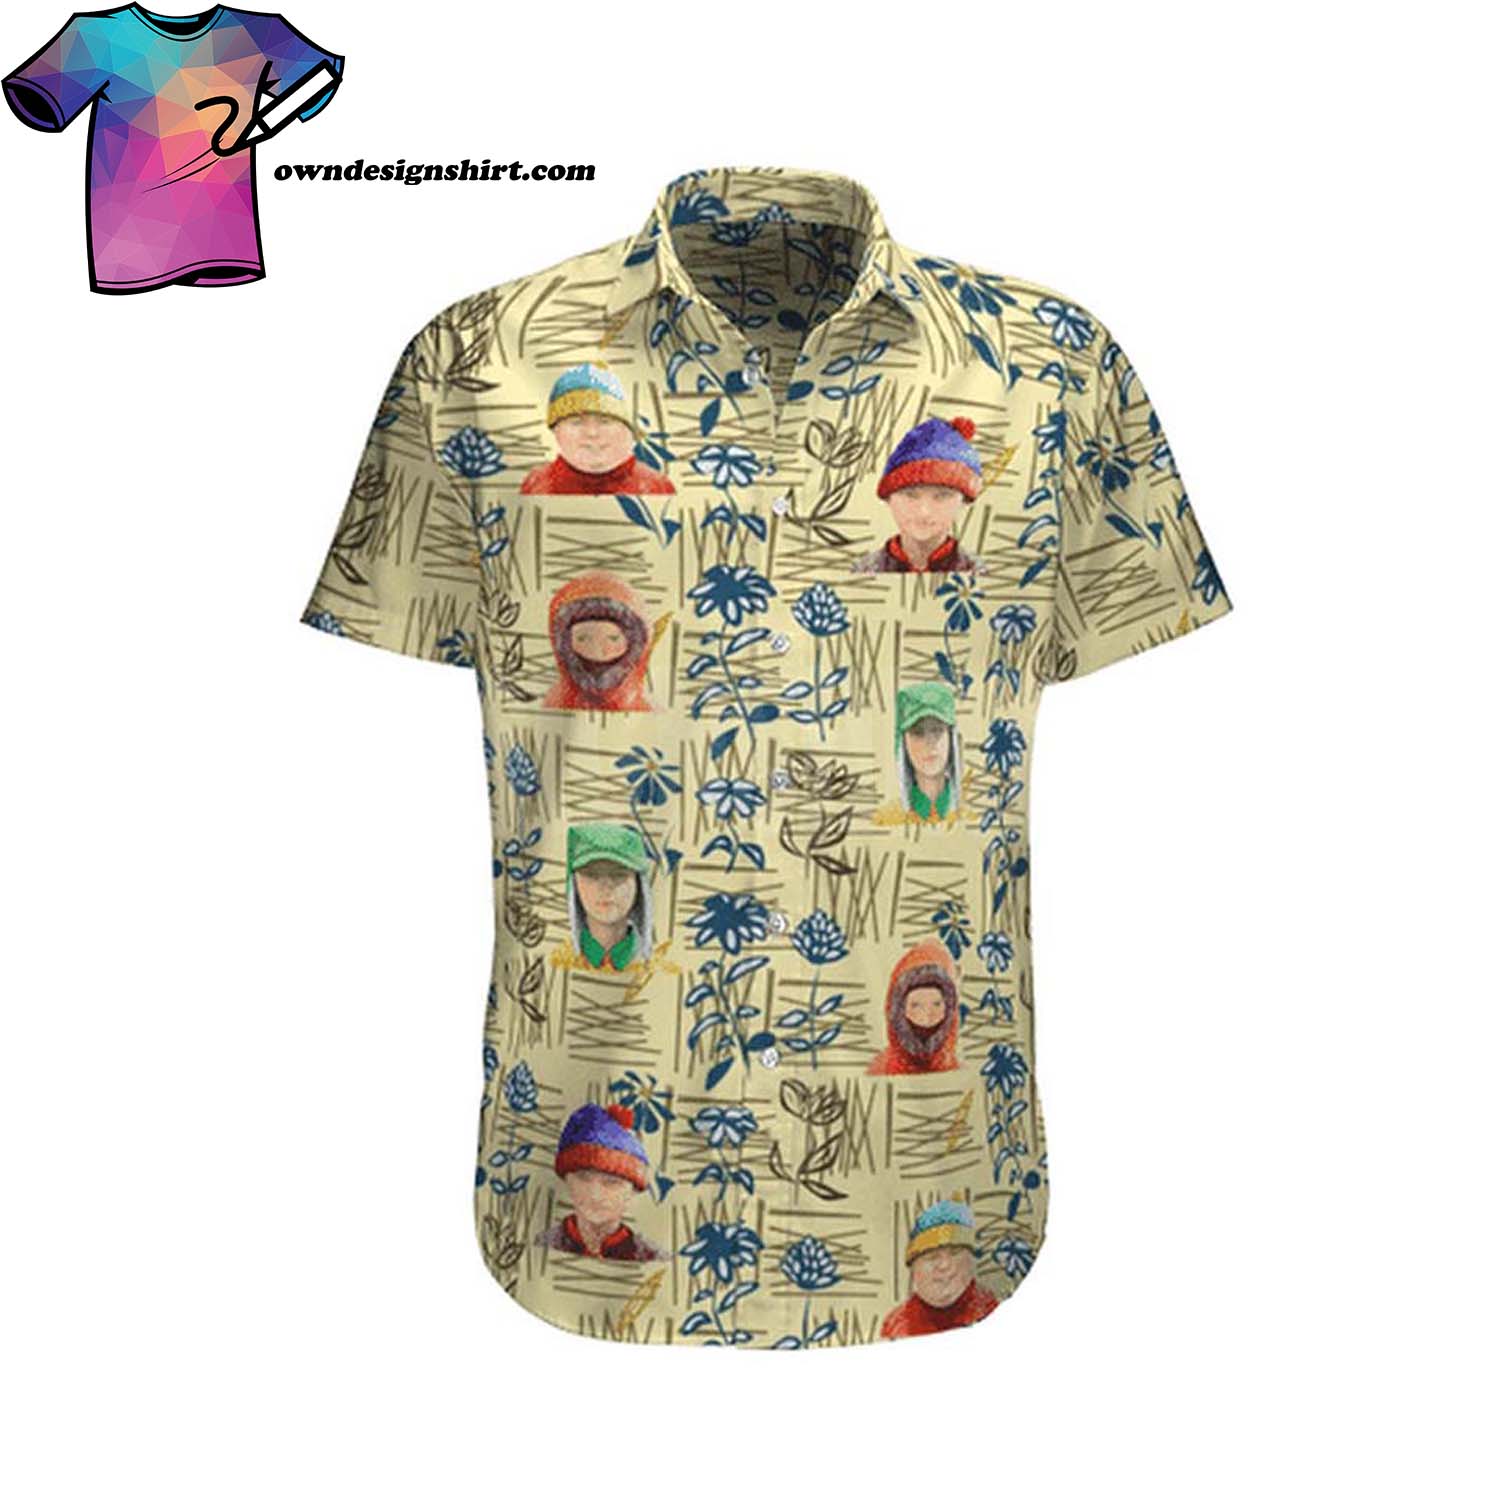 Description of South Park Hawaiian shirt